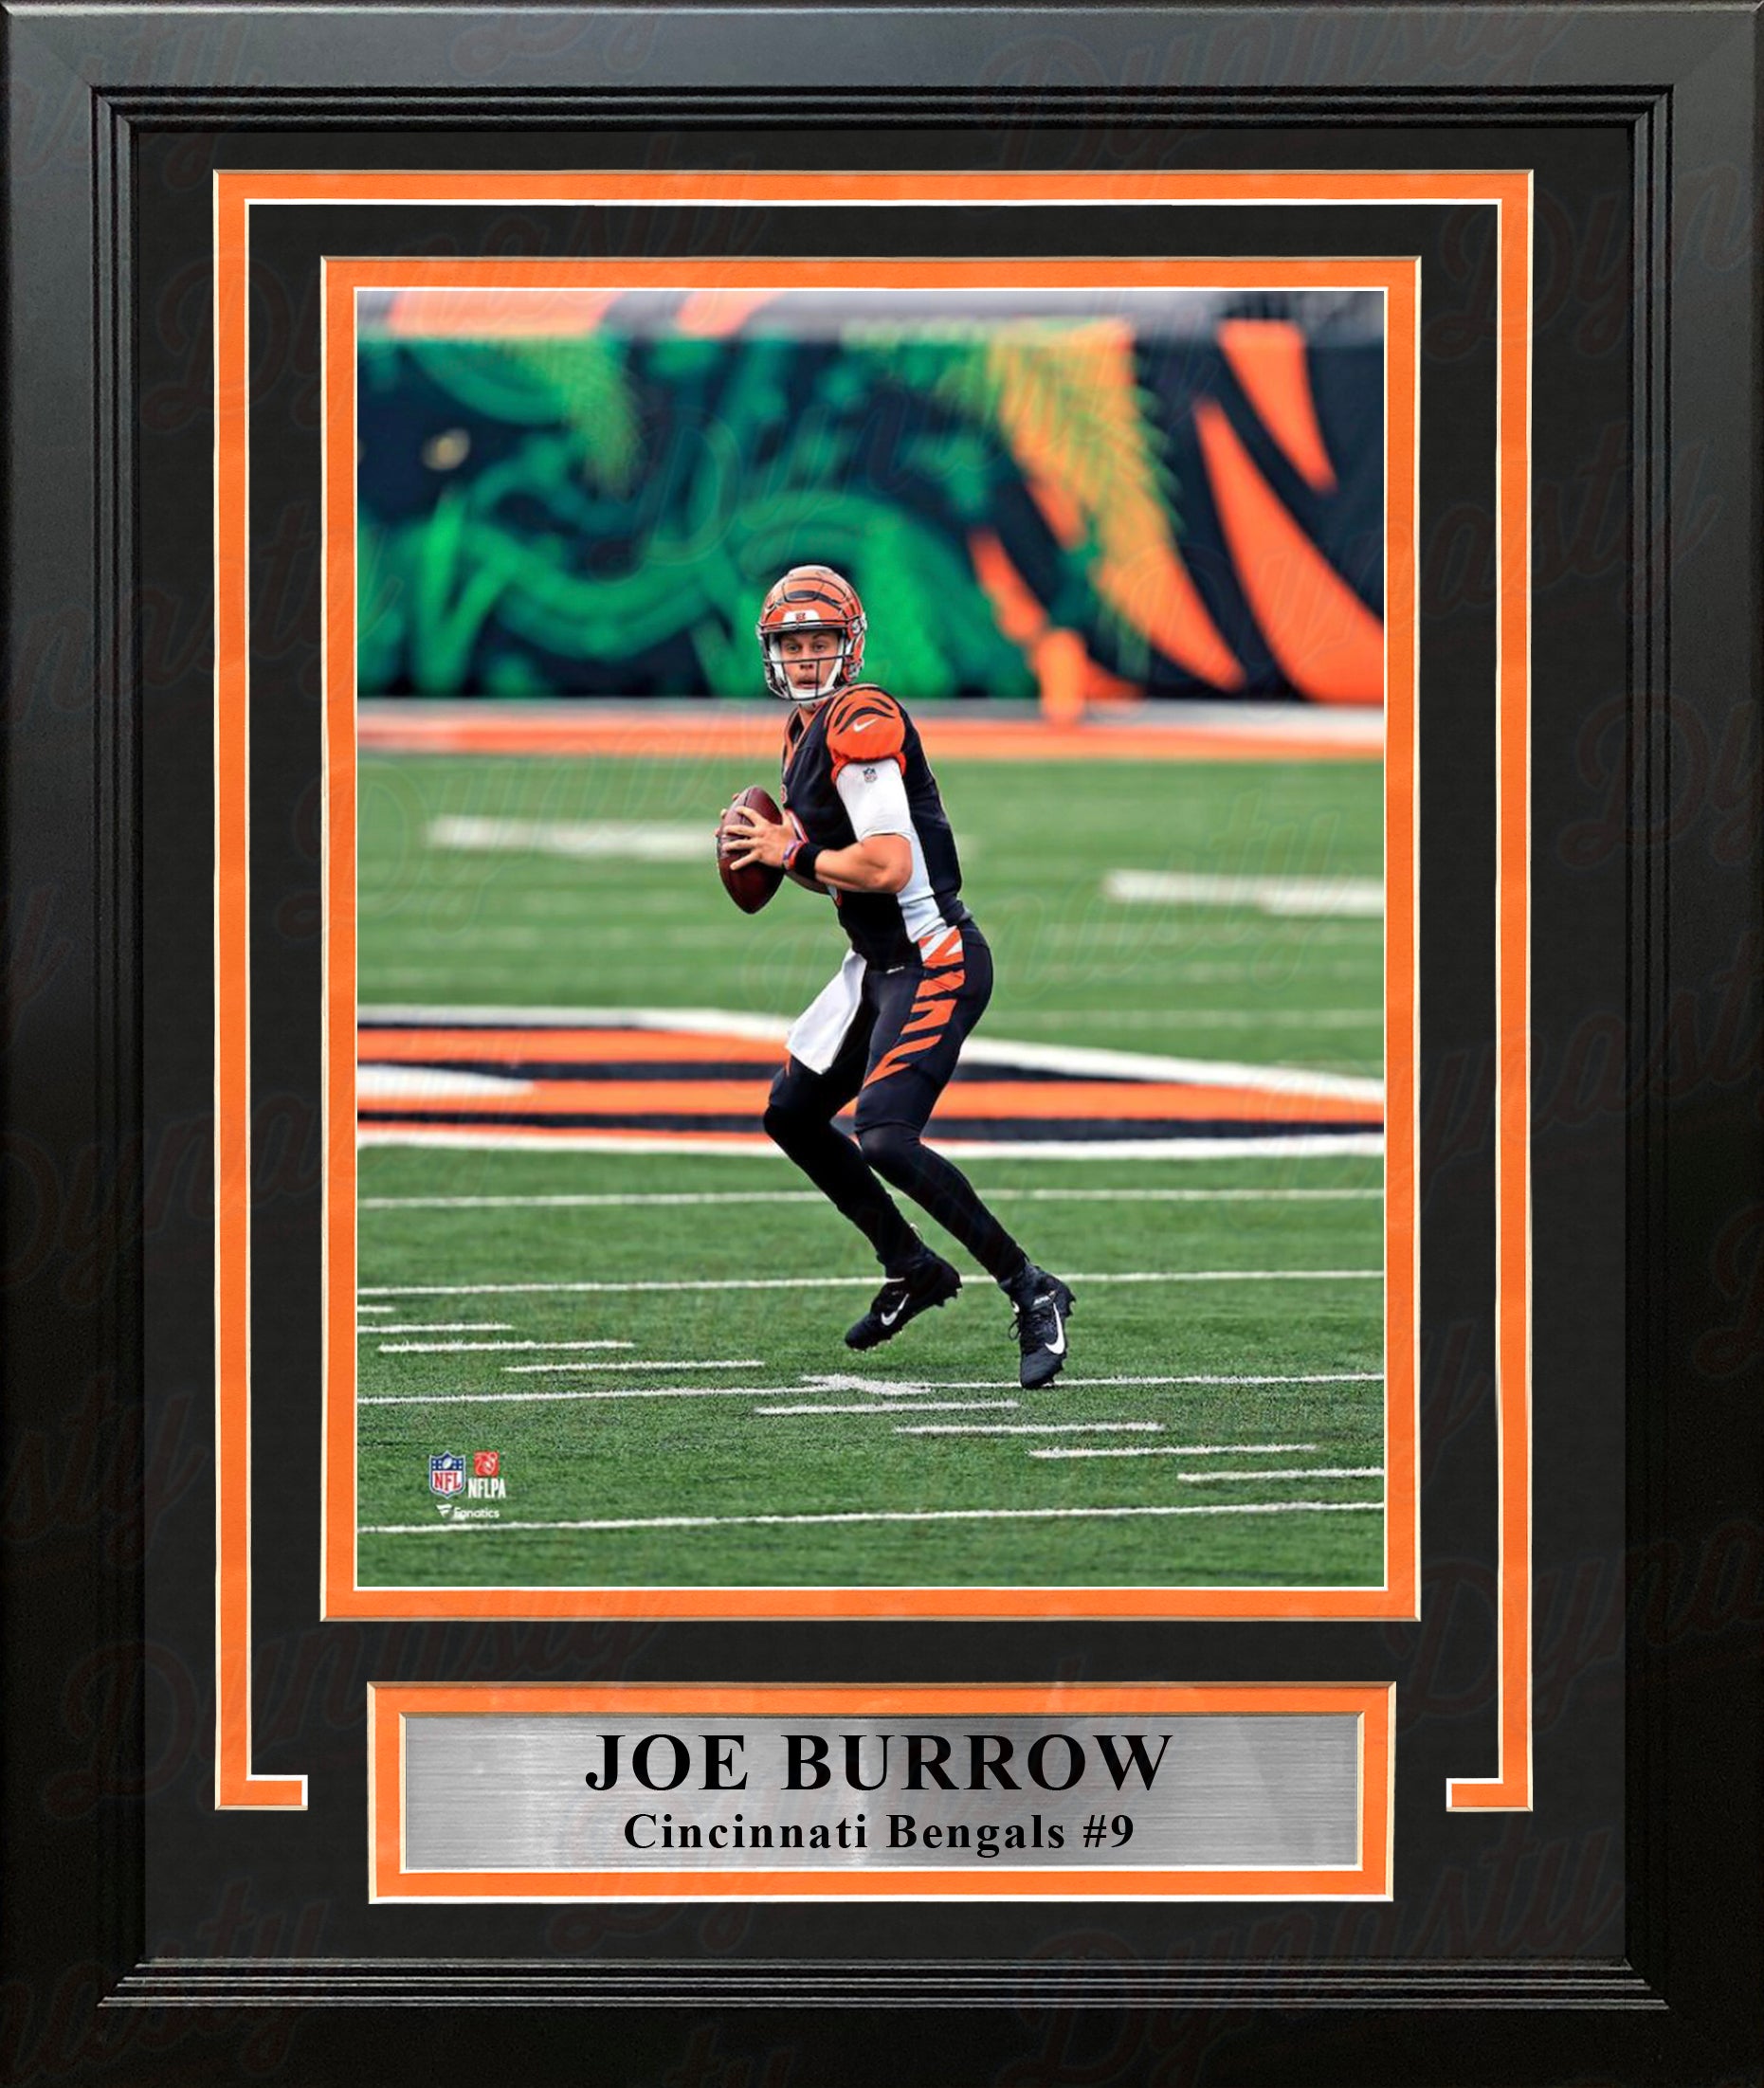 Joe Burrow in Action Cincinnati Bengals 8" x 10" Framed Football Photo - Dynasty Sports & Framing 